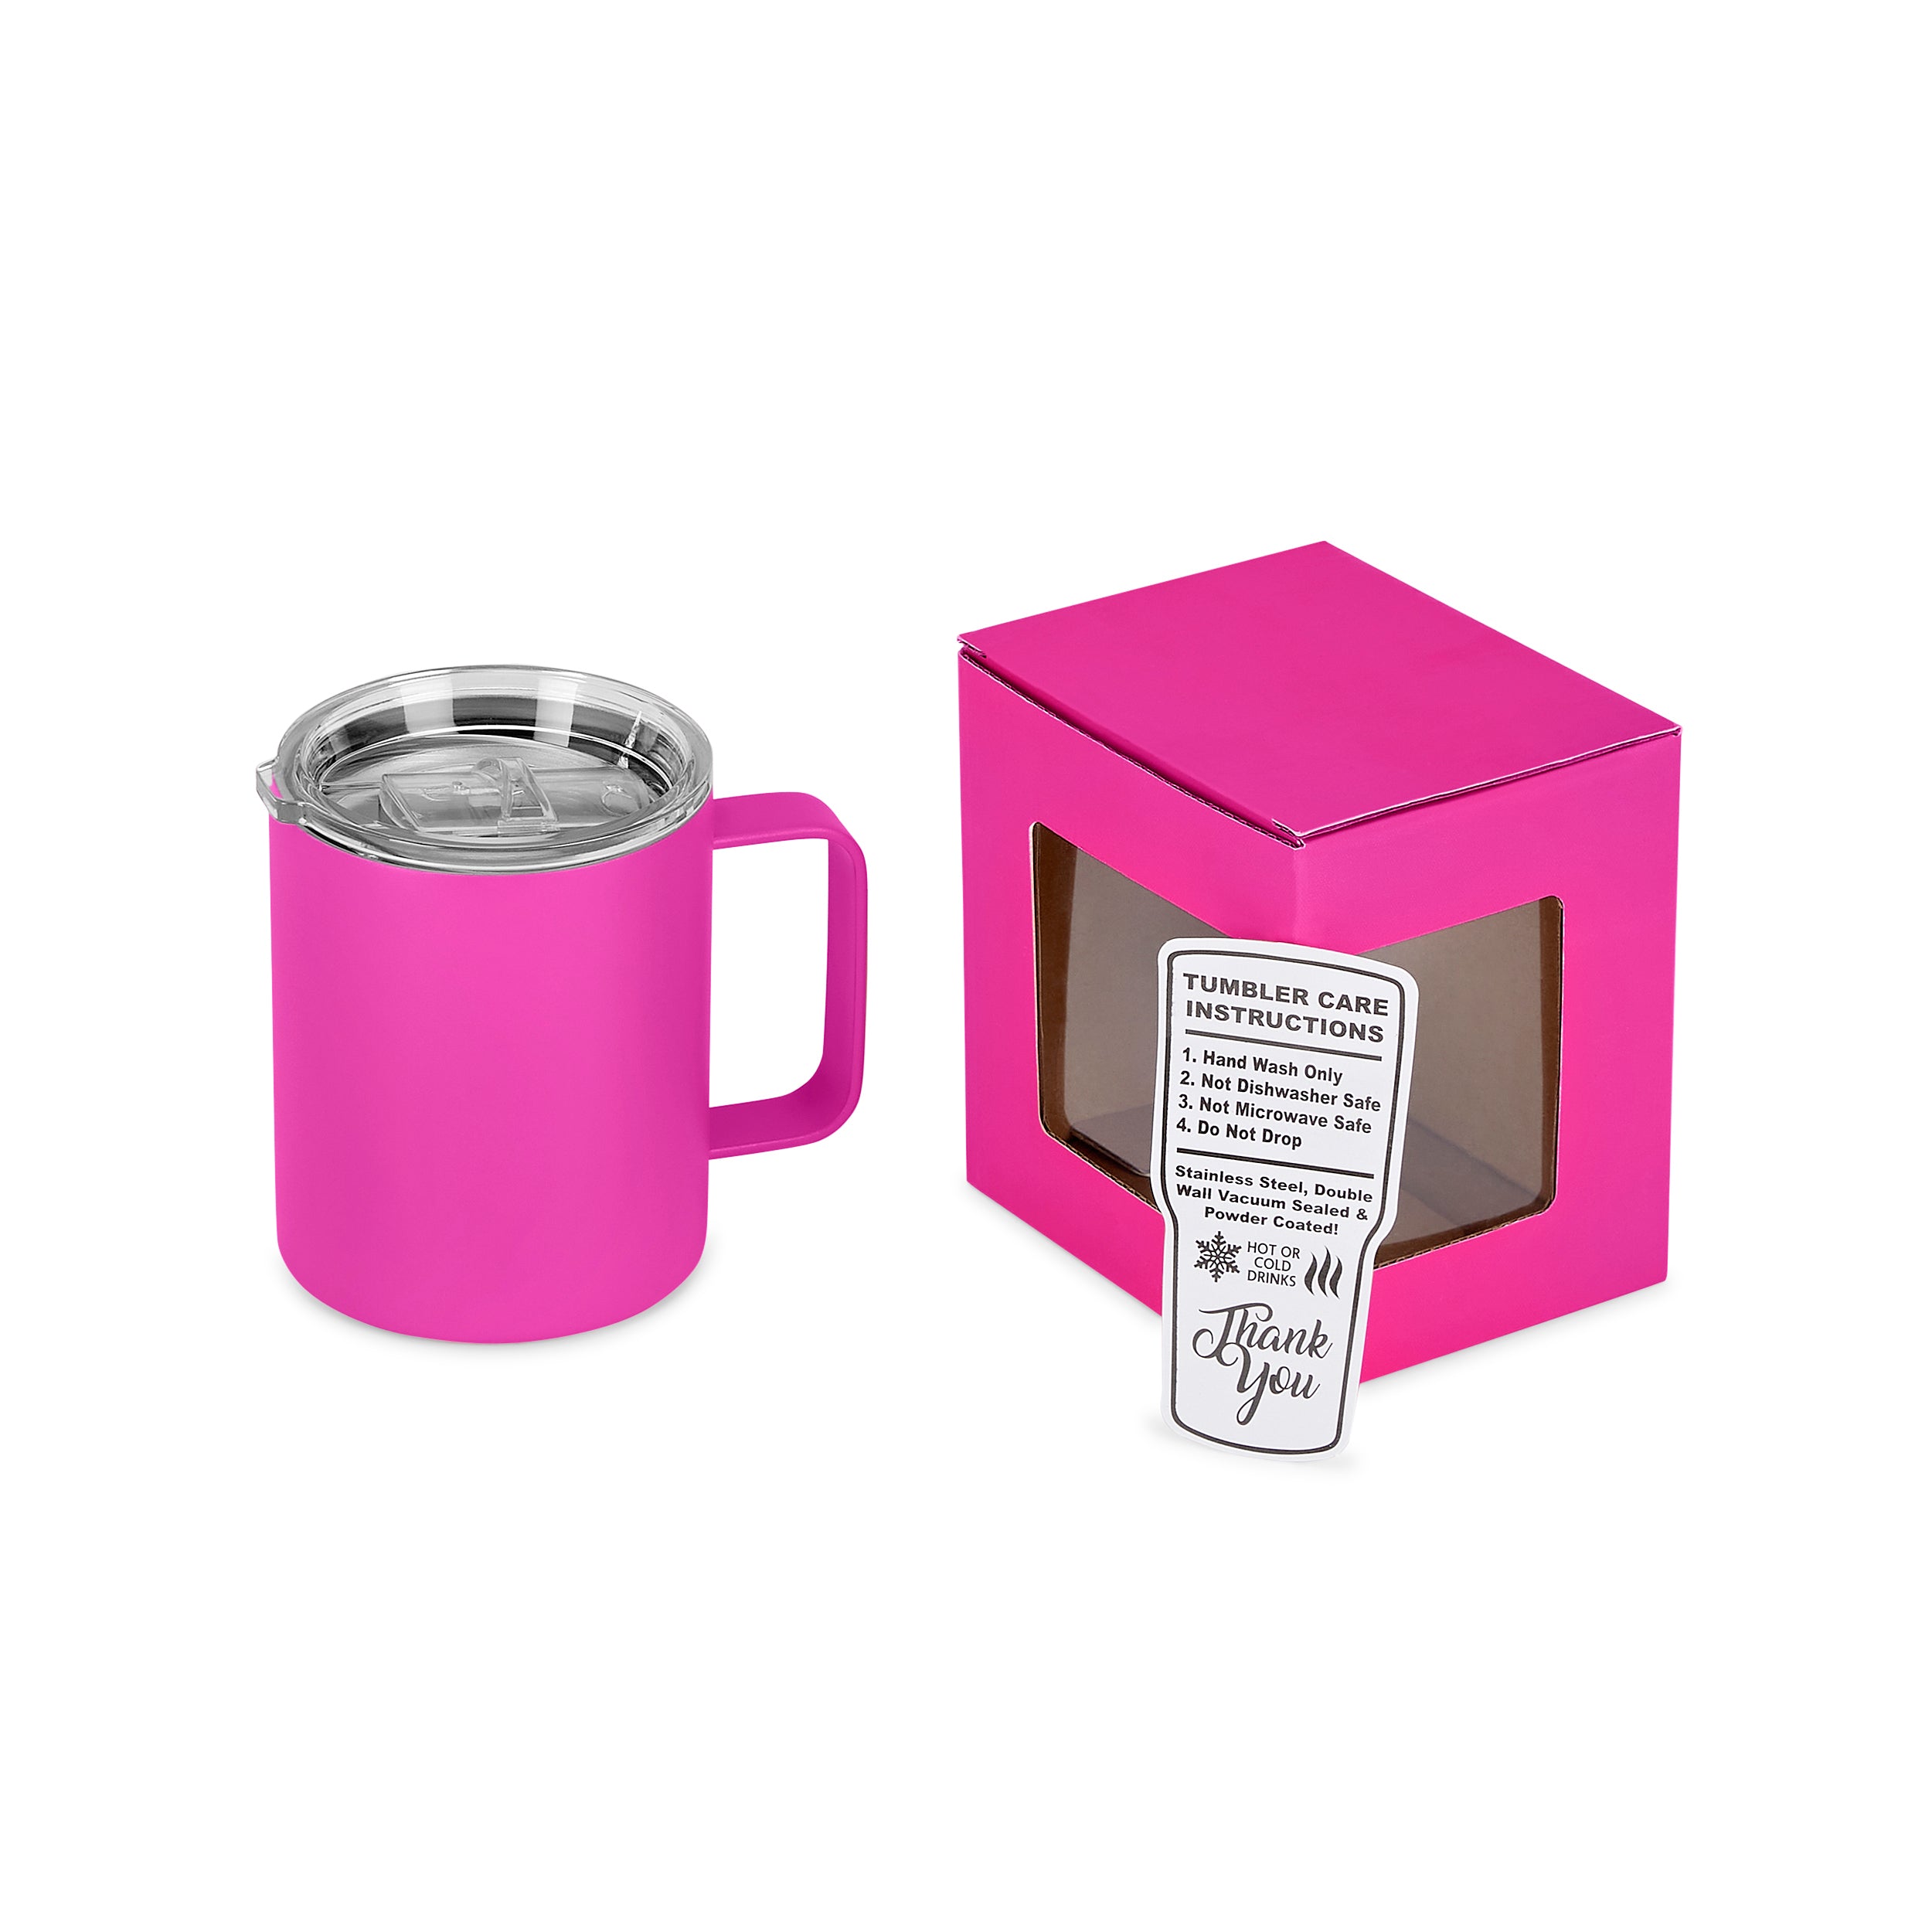 12oz Pregnancy-themed Coffee Mug